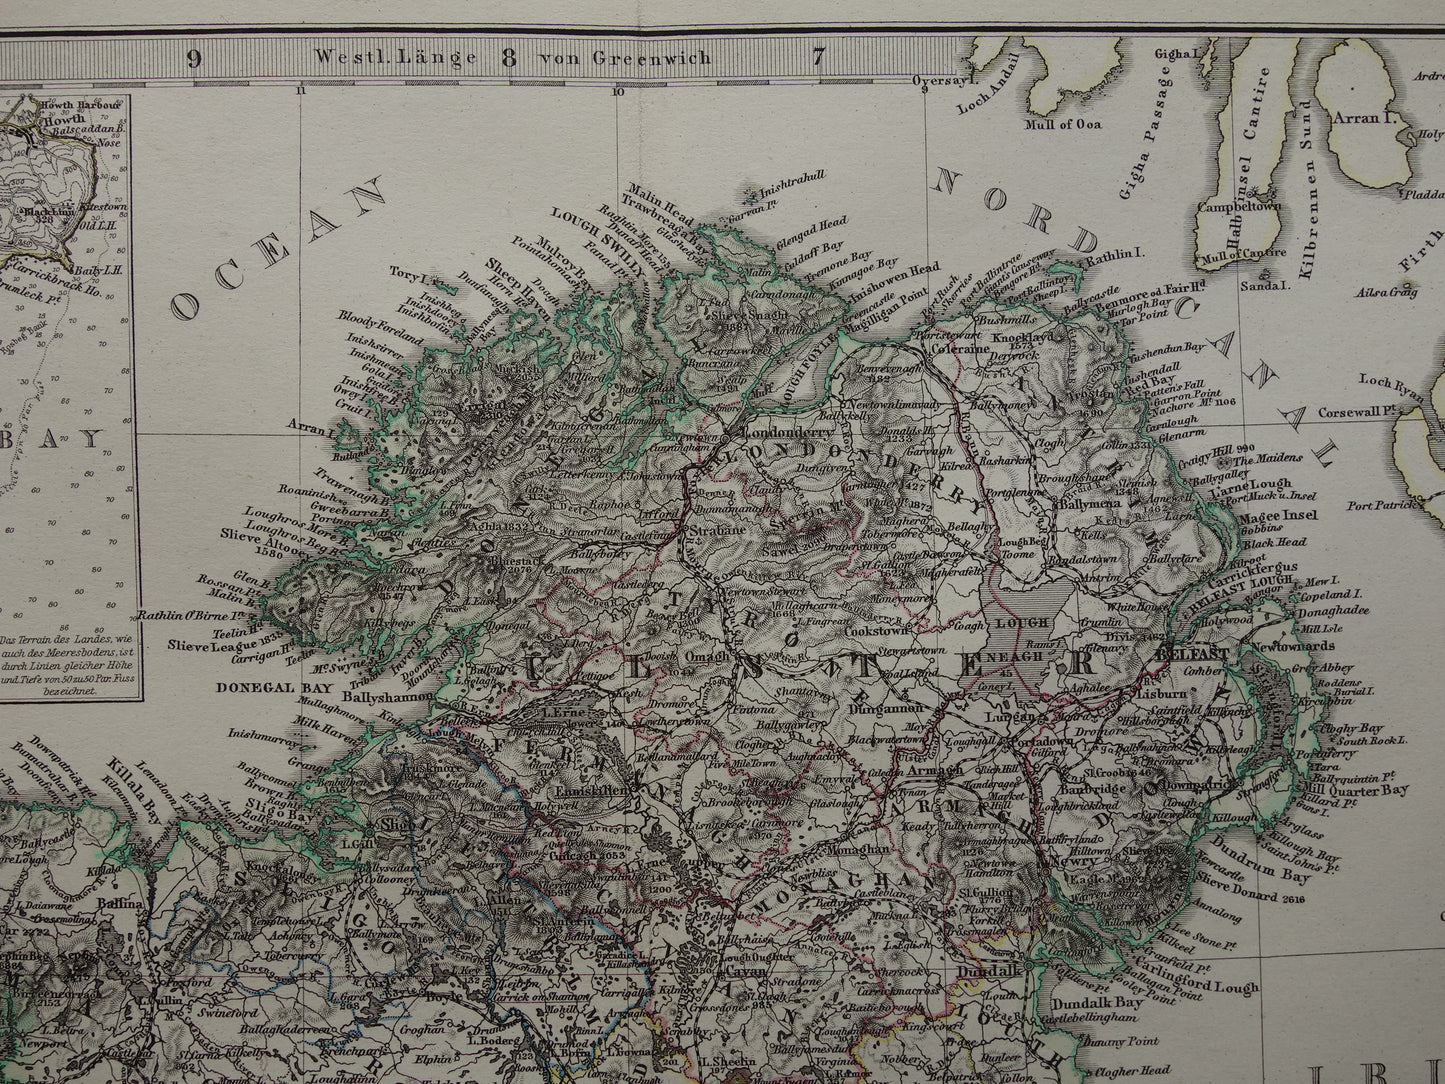 IERLAND antieke kaart van Ierland 1878 originele 155+ jaar oude Duitse landkaart van Ierland met jaartal